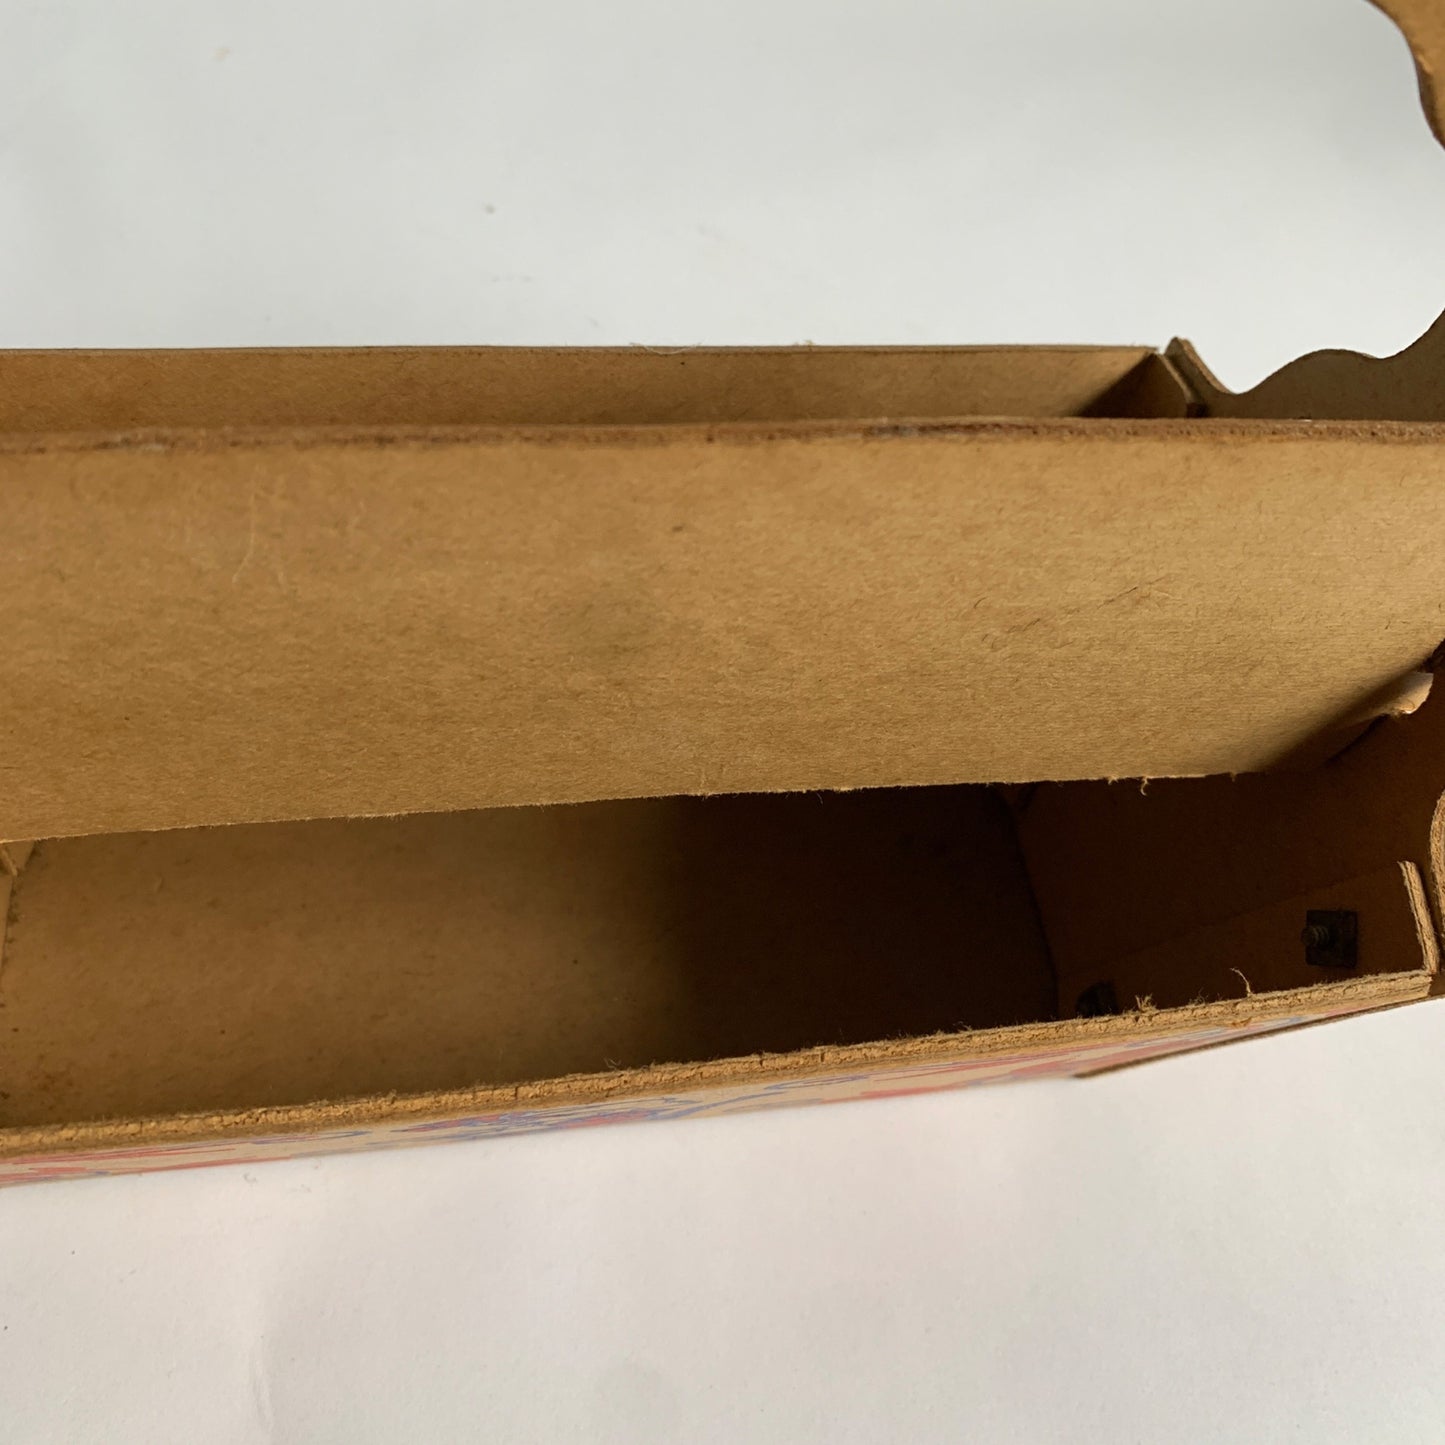 Vintage Pressed Cardboard Child's Toy Sewing Kit Box Handled